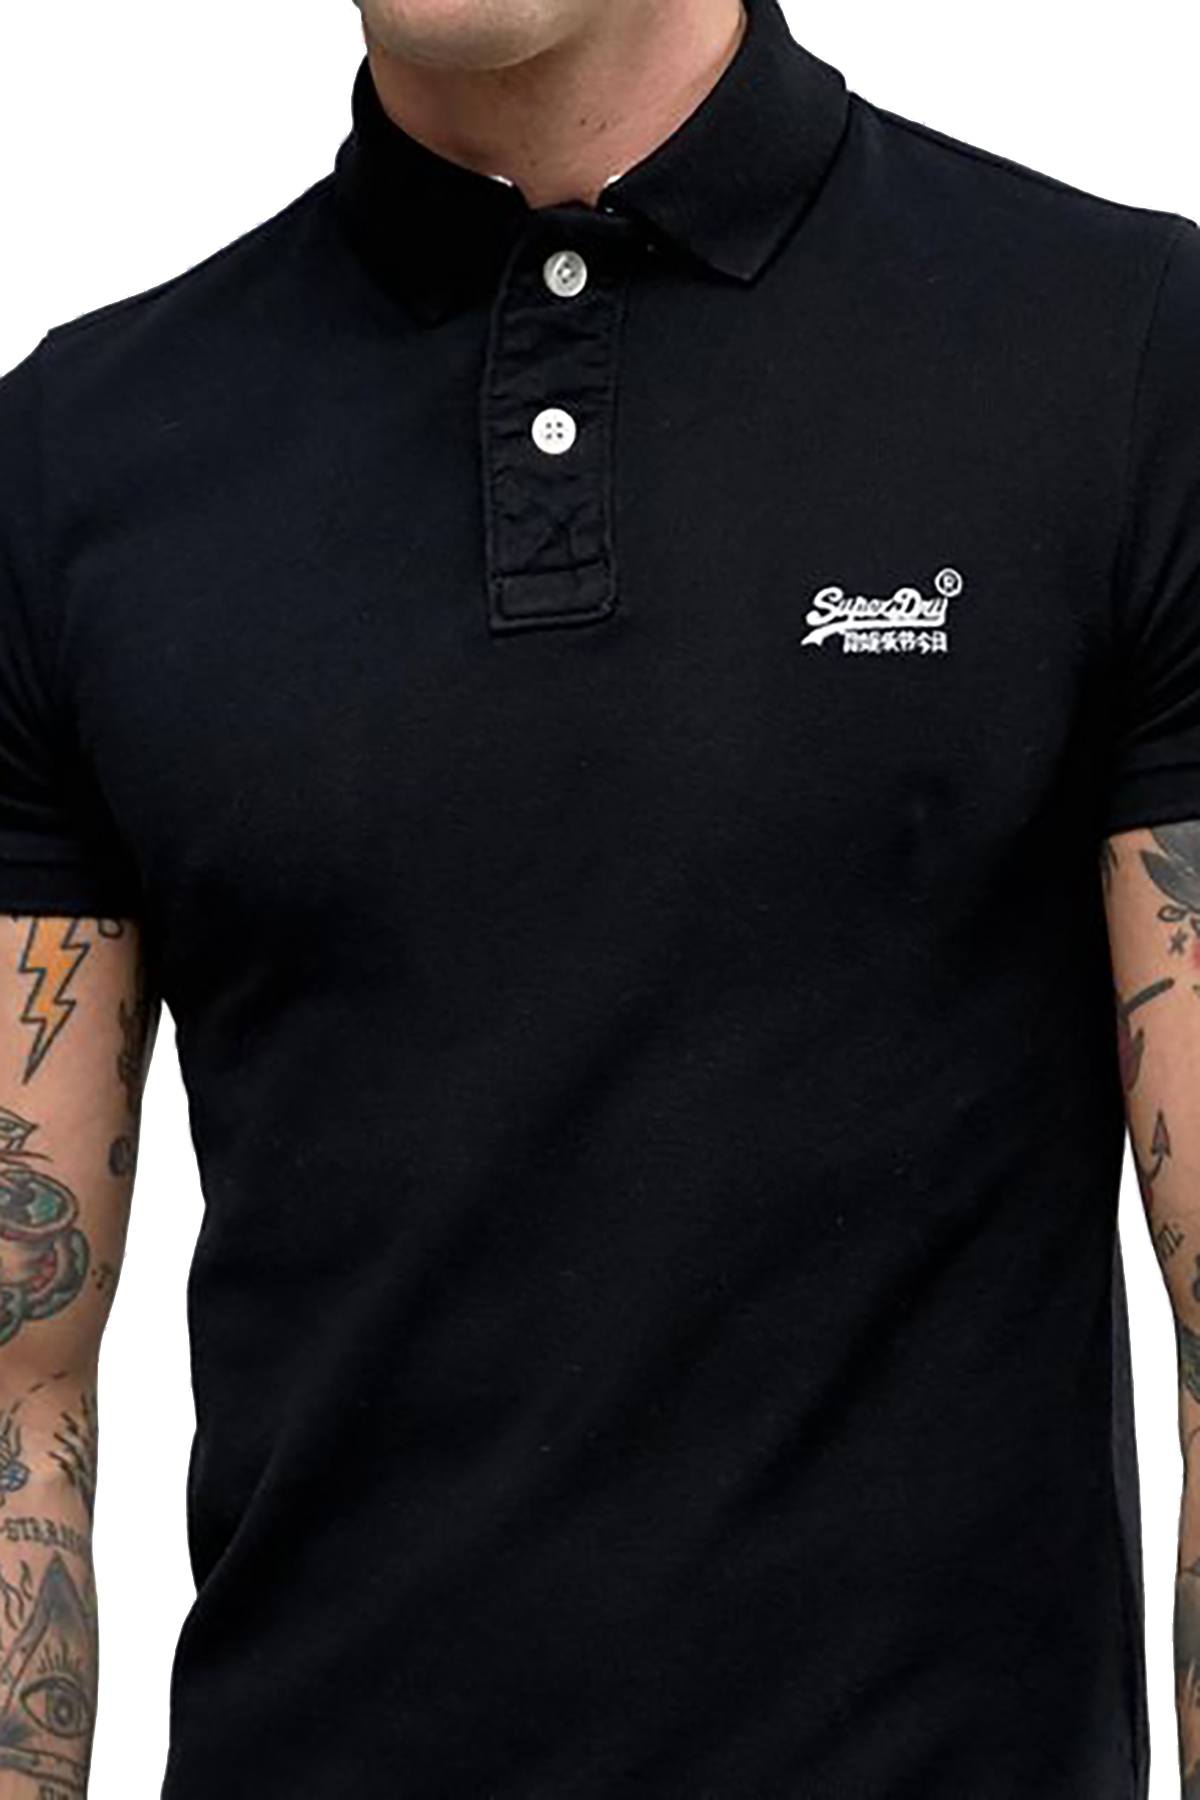 SuperDry Black – Classic CheapUndies Short-Sleeve Pique Polo Shirt